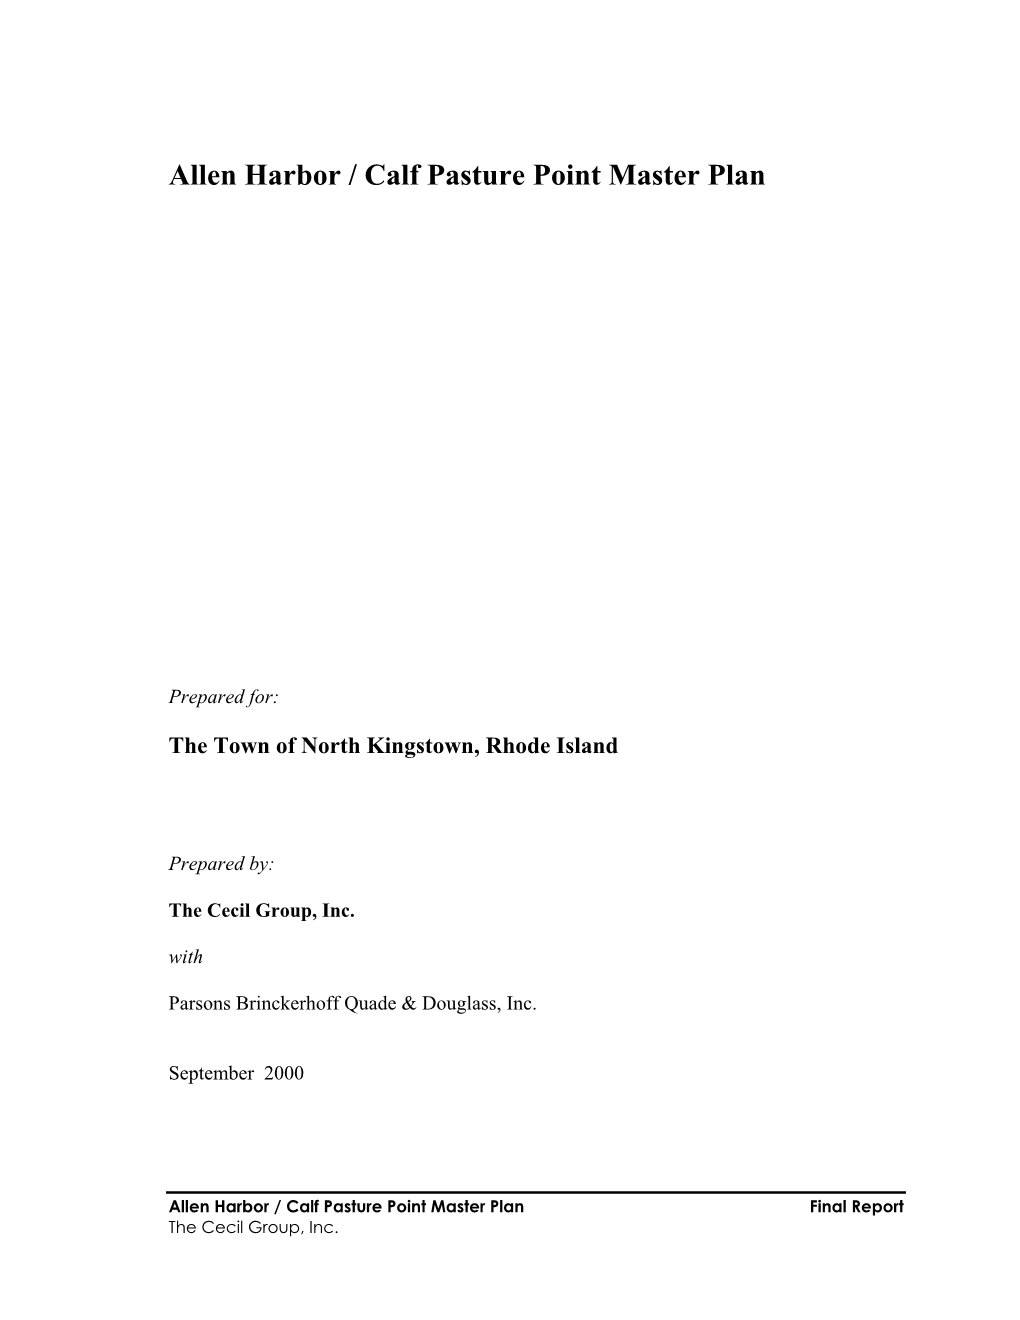 Allen Harbor Calf Pasture Point Master Plan